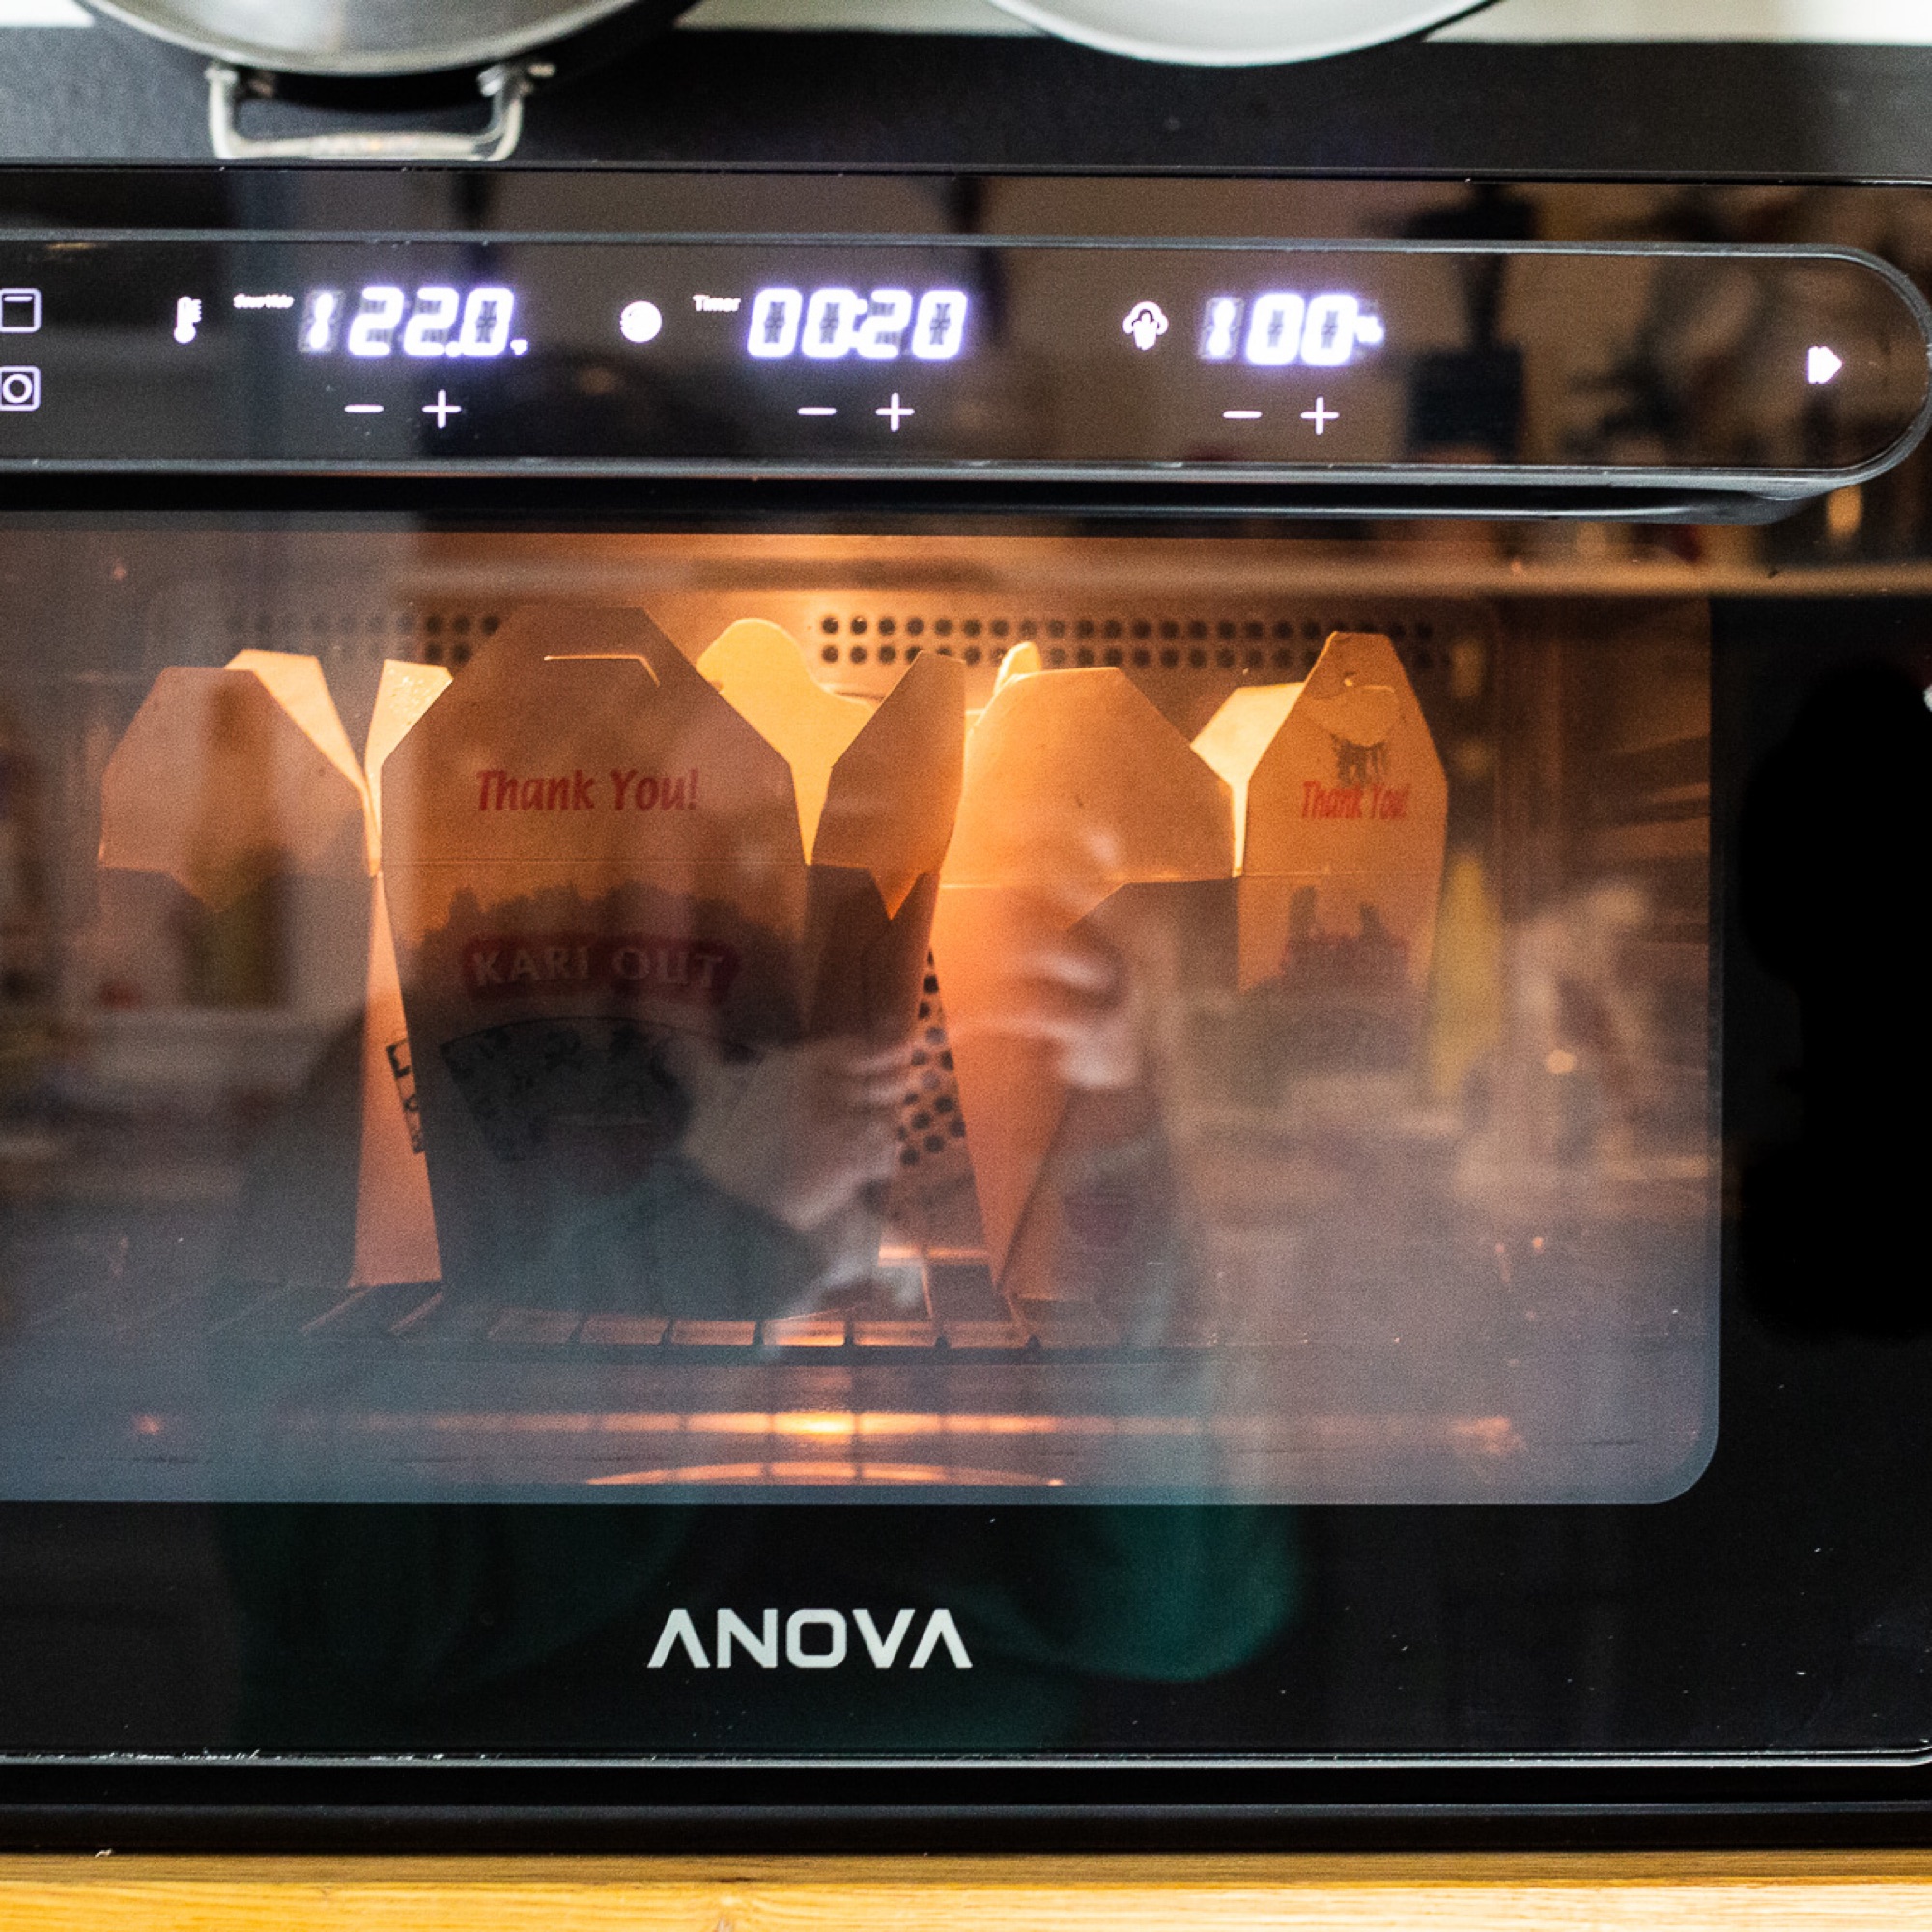 Anova on X: Come see the new Anova Precision Oven @ #CES2020